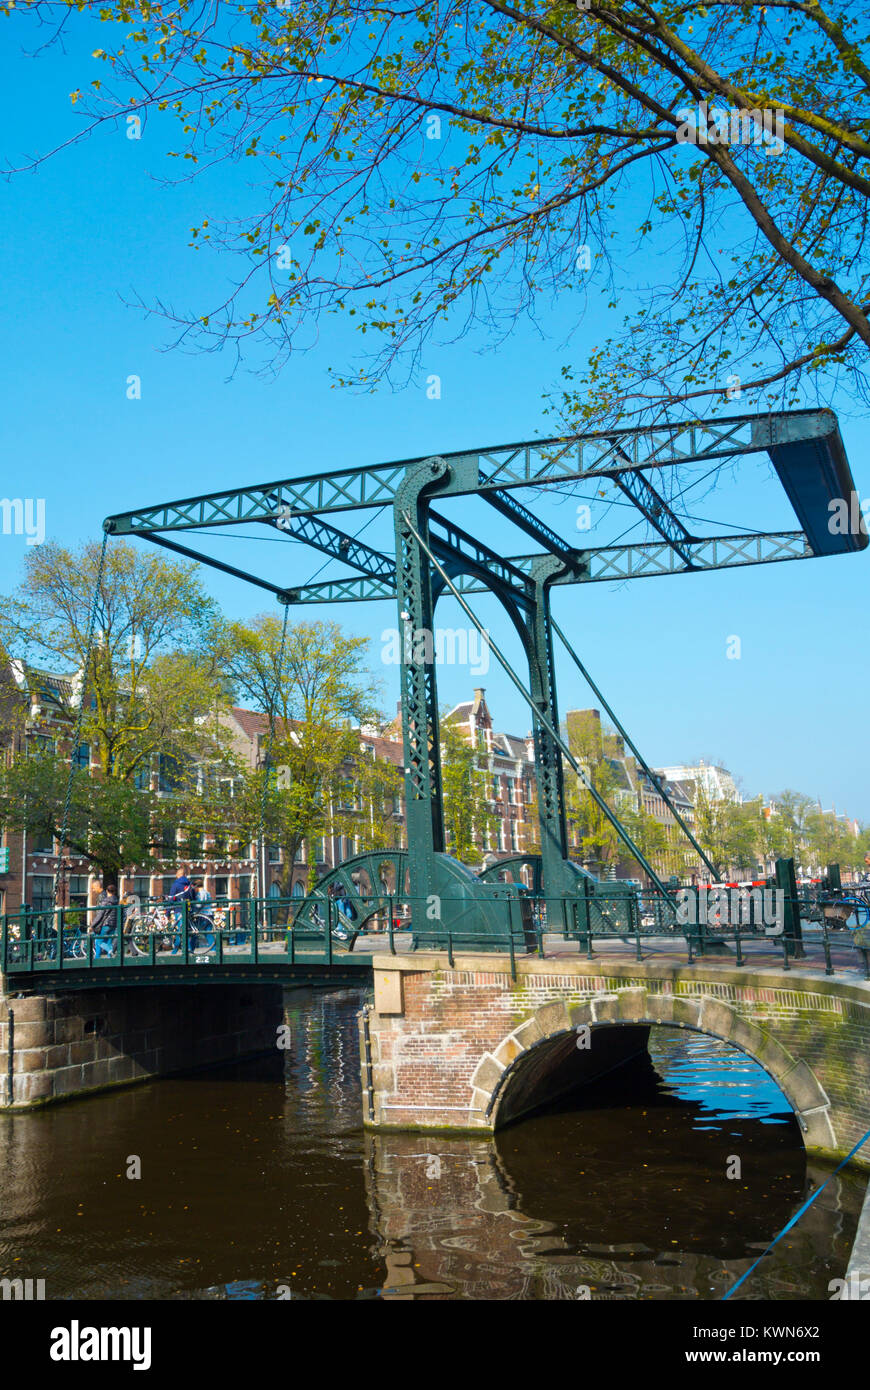 Aluminiumbrug, Aluminium bridge, draw bridge, from 1896, Amsterdam, The Netherlands Stock Photo